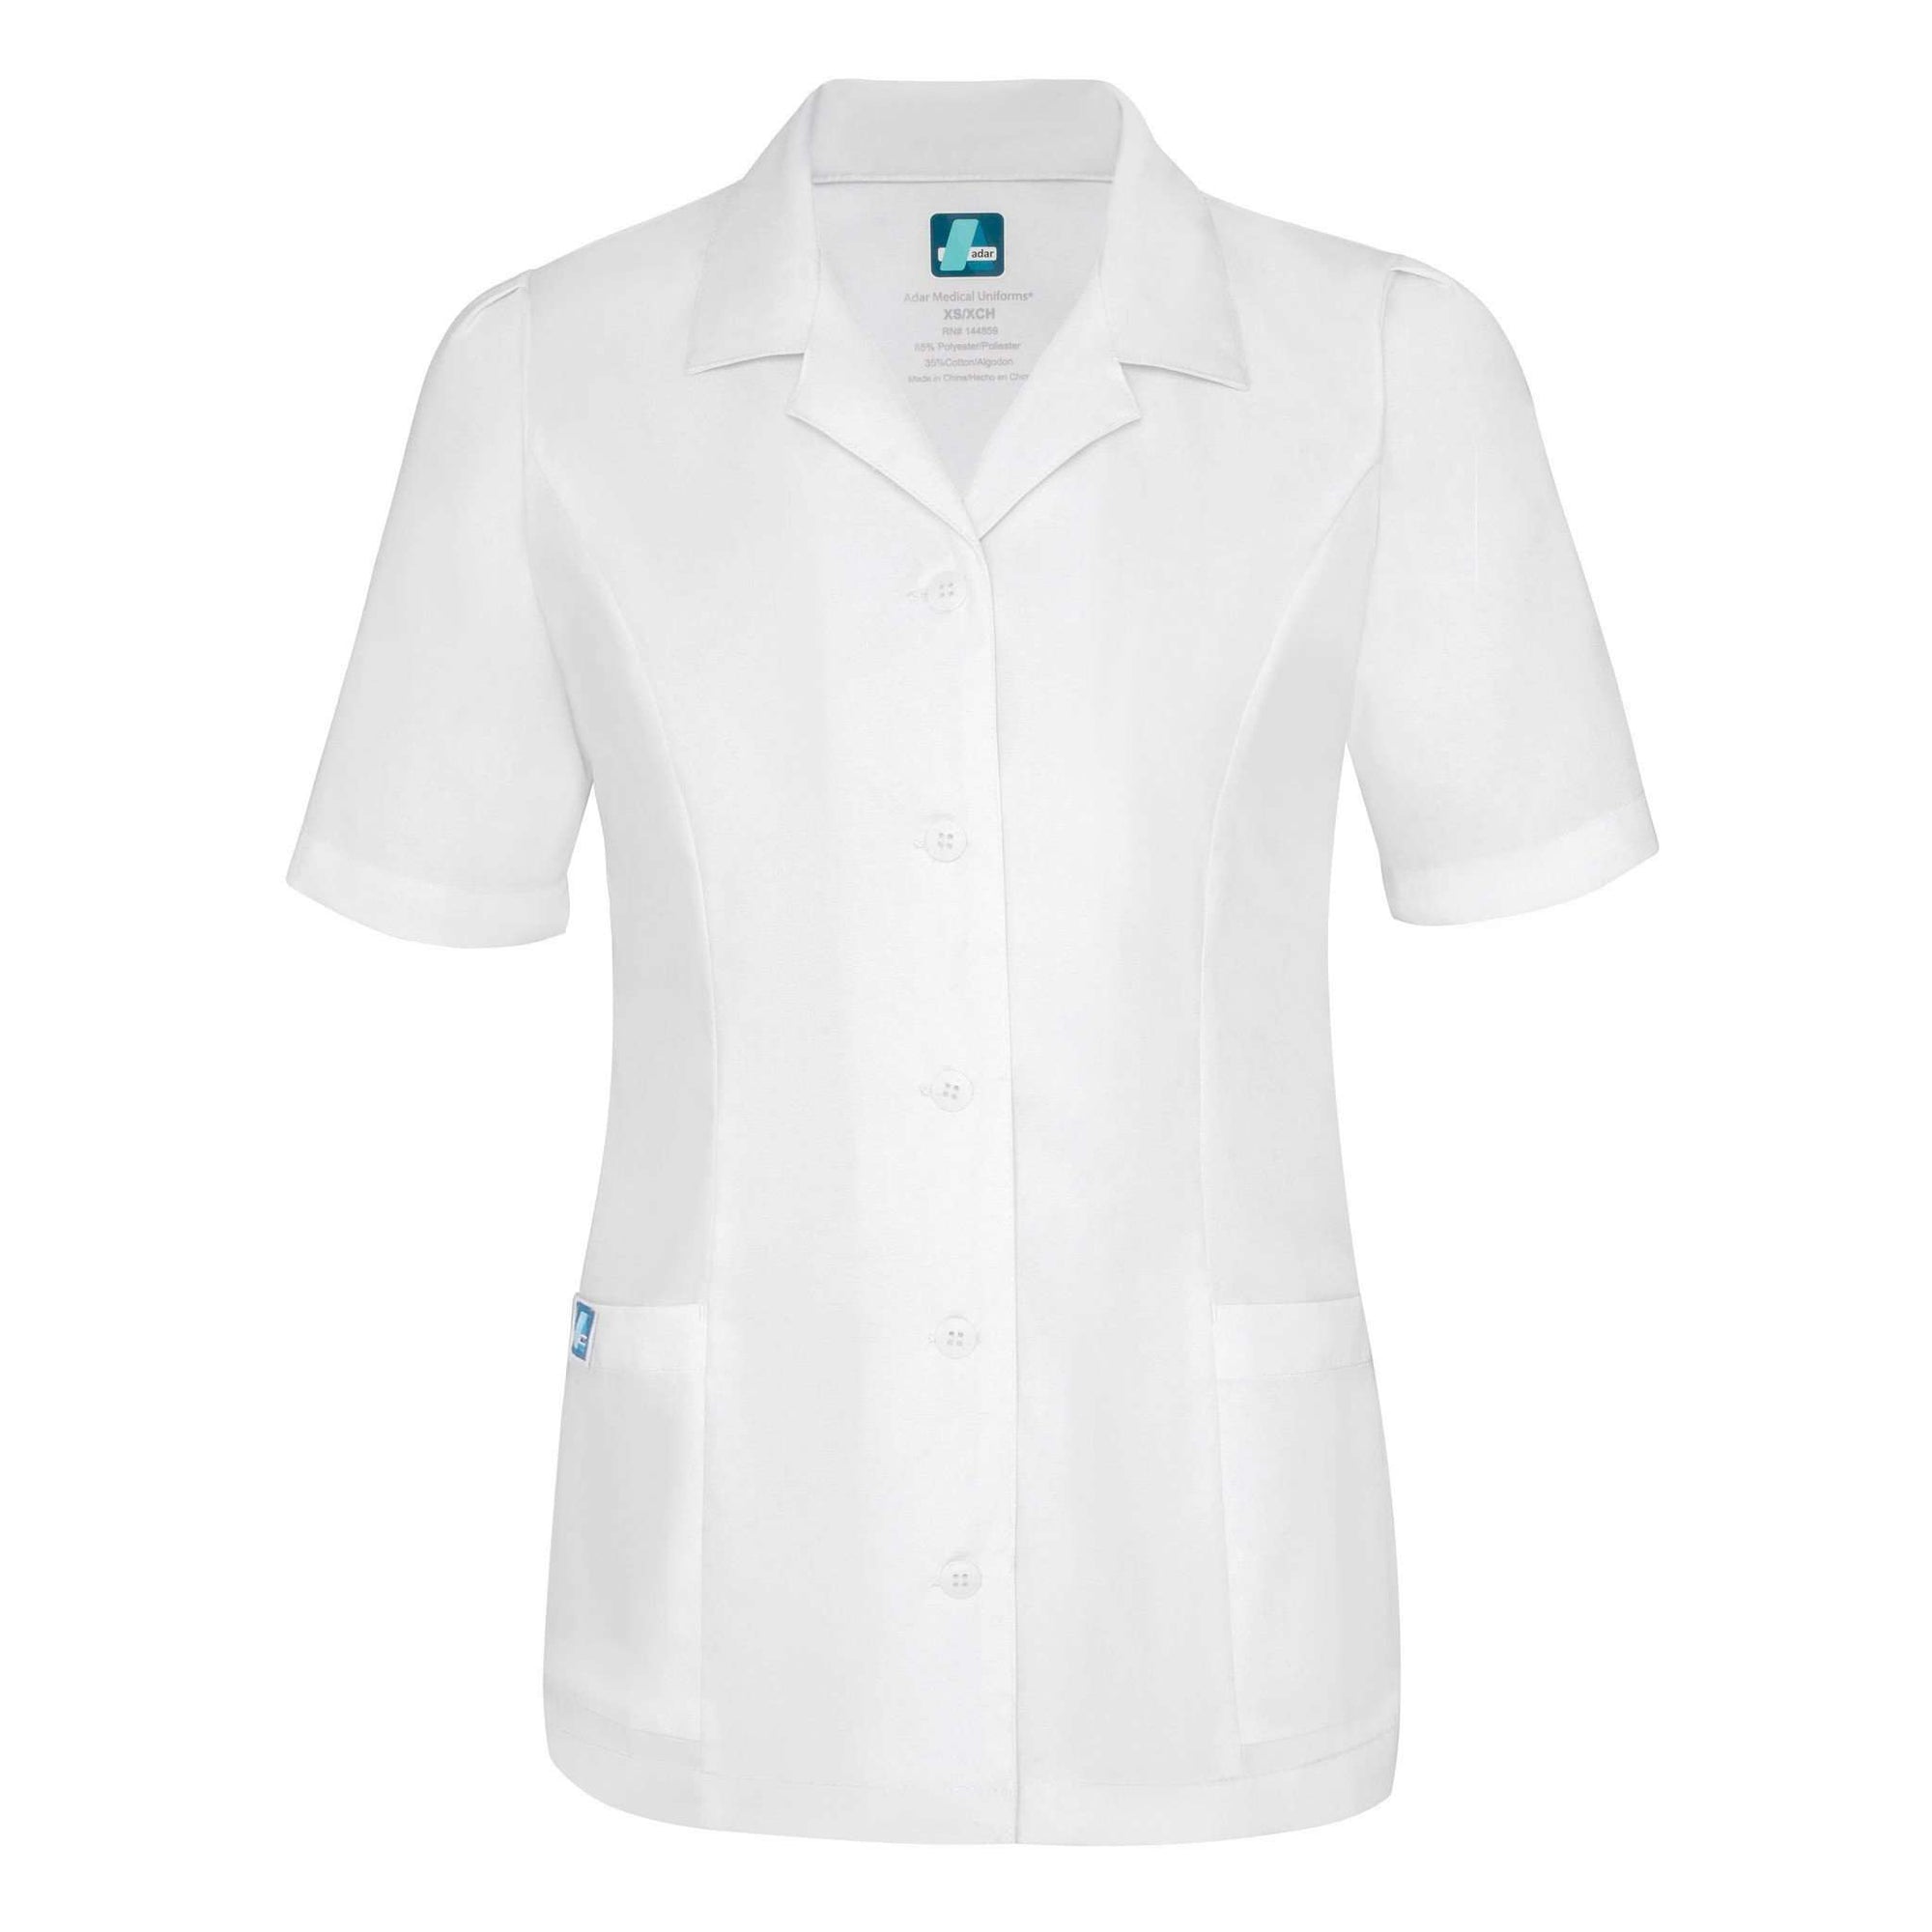  Adar - uniforms Medical Uniform Tops uniforms online Adar Universal Lapel Collar Nurse Top - SchoolUniforms.com